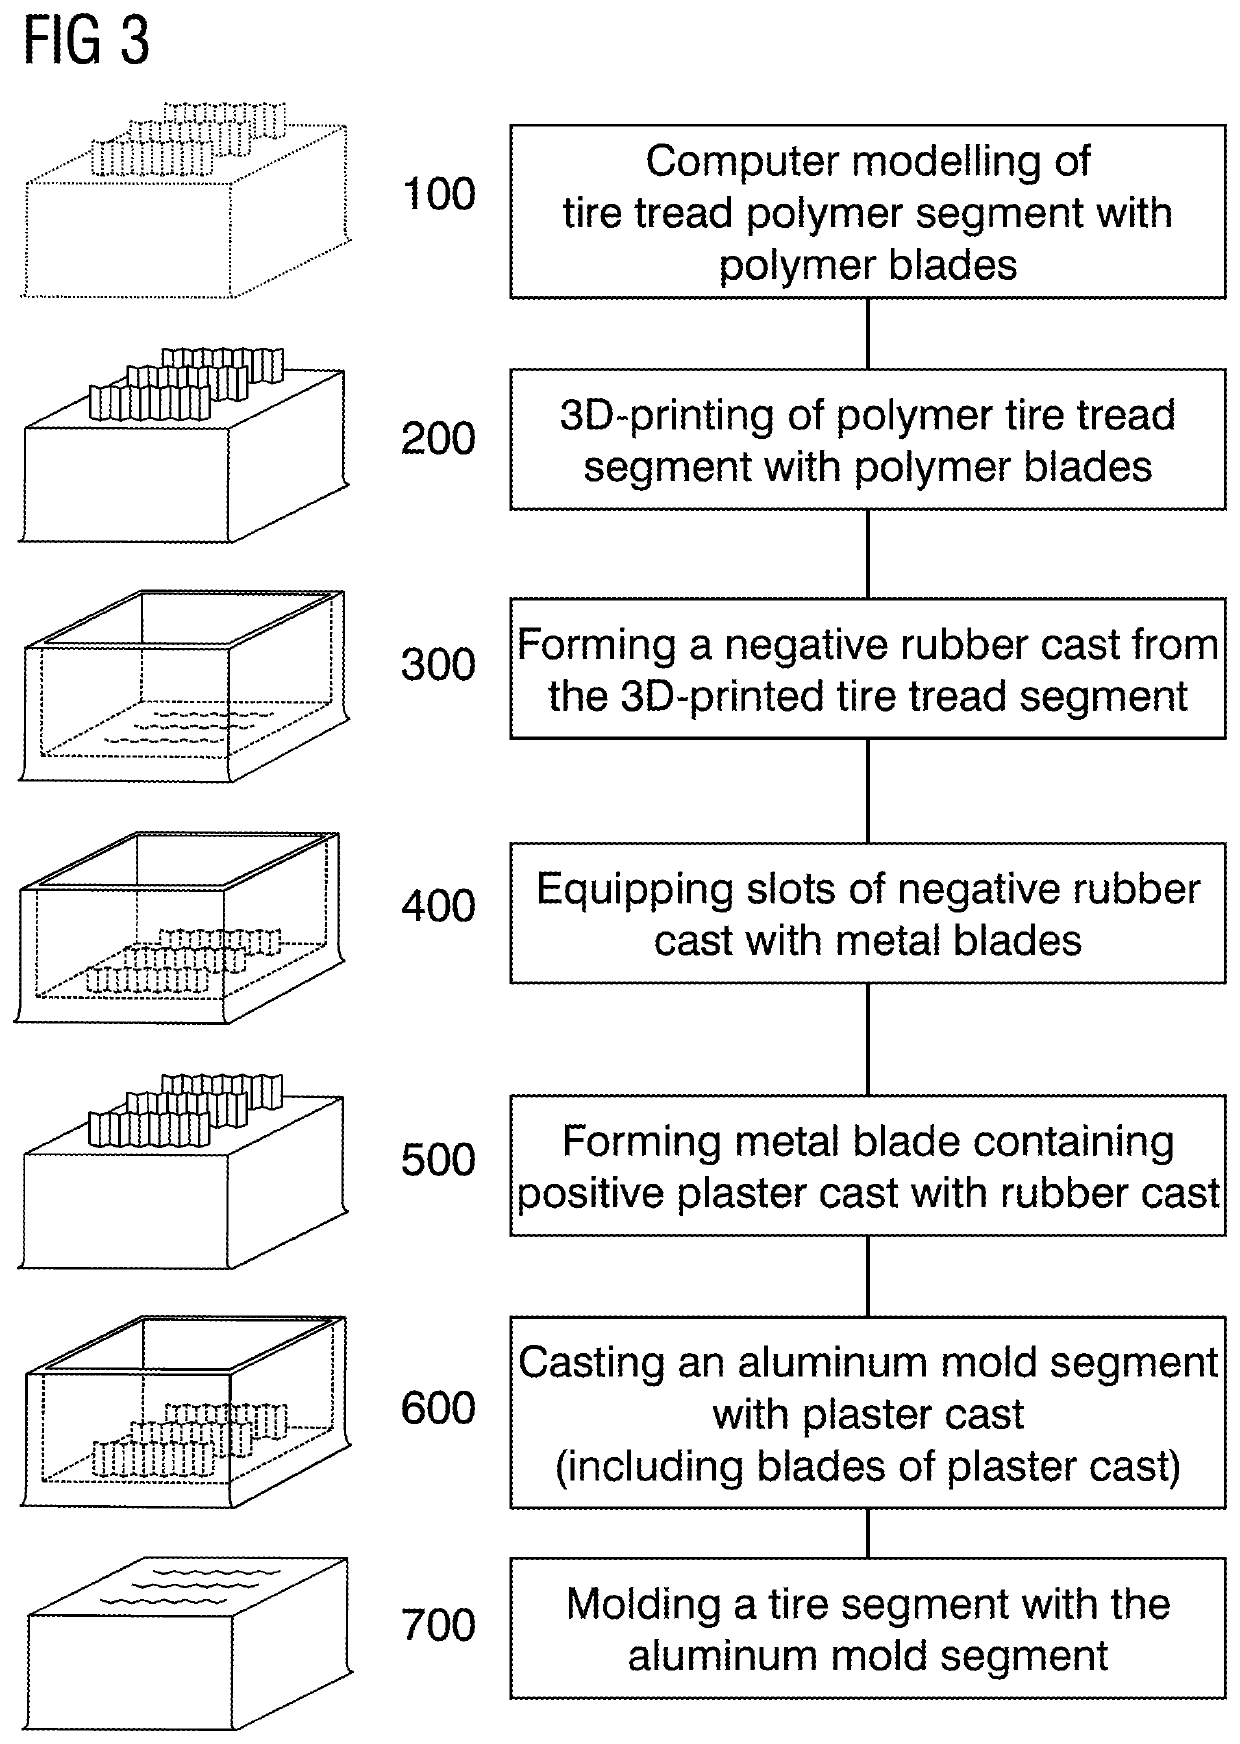 Tire segment model and a method of making a tire mold segment